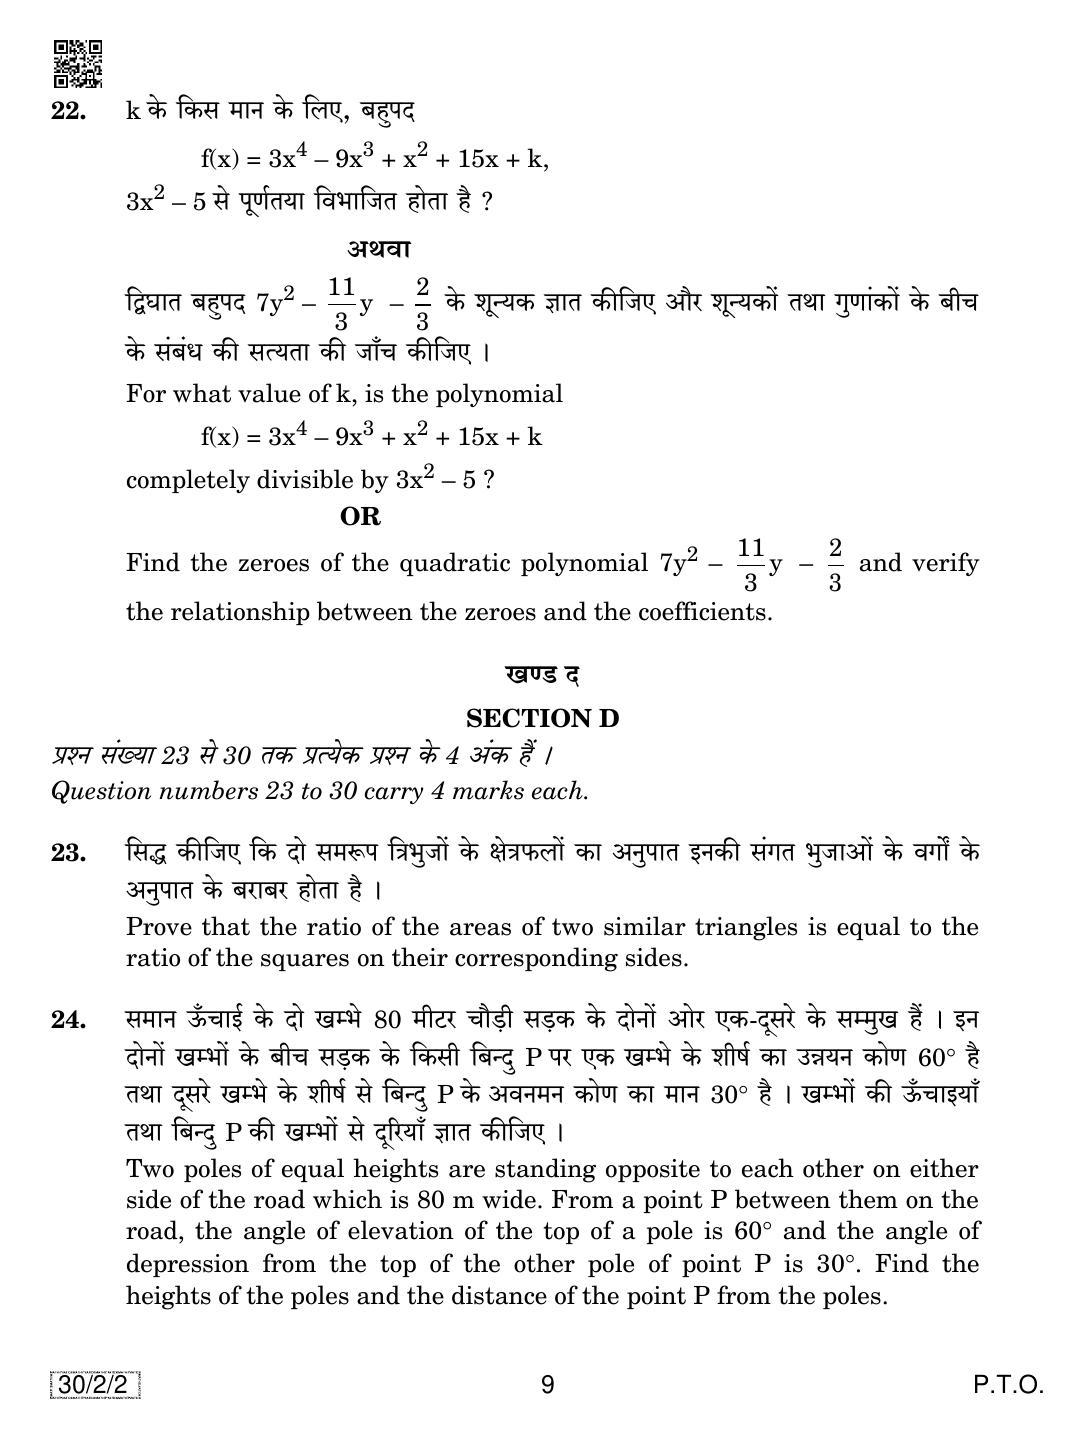 CBSE Class 10 Maths (30/2/2 - SET 2) 2019 Question Paper - Page 9